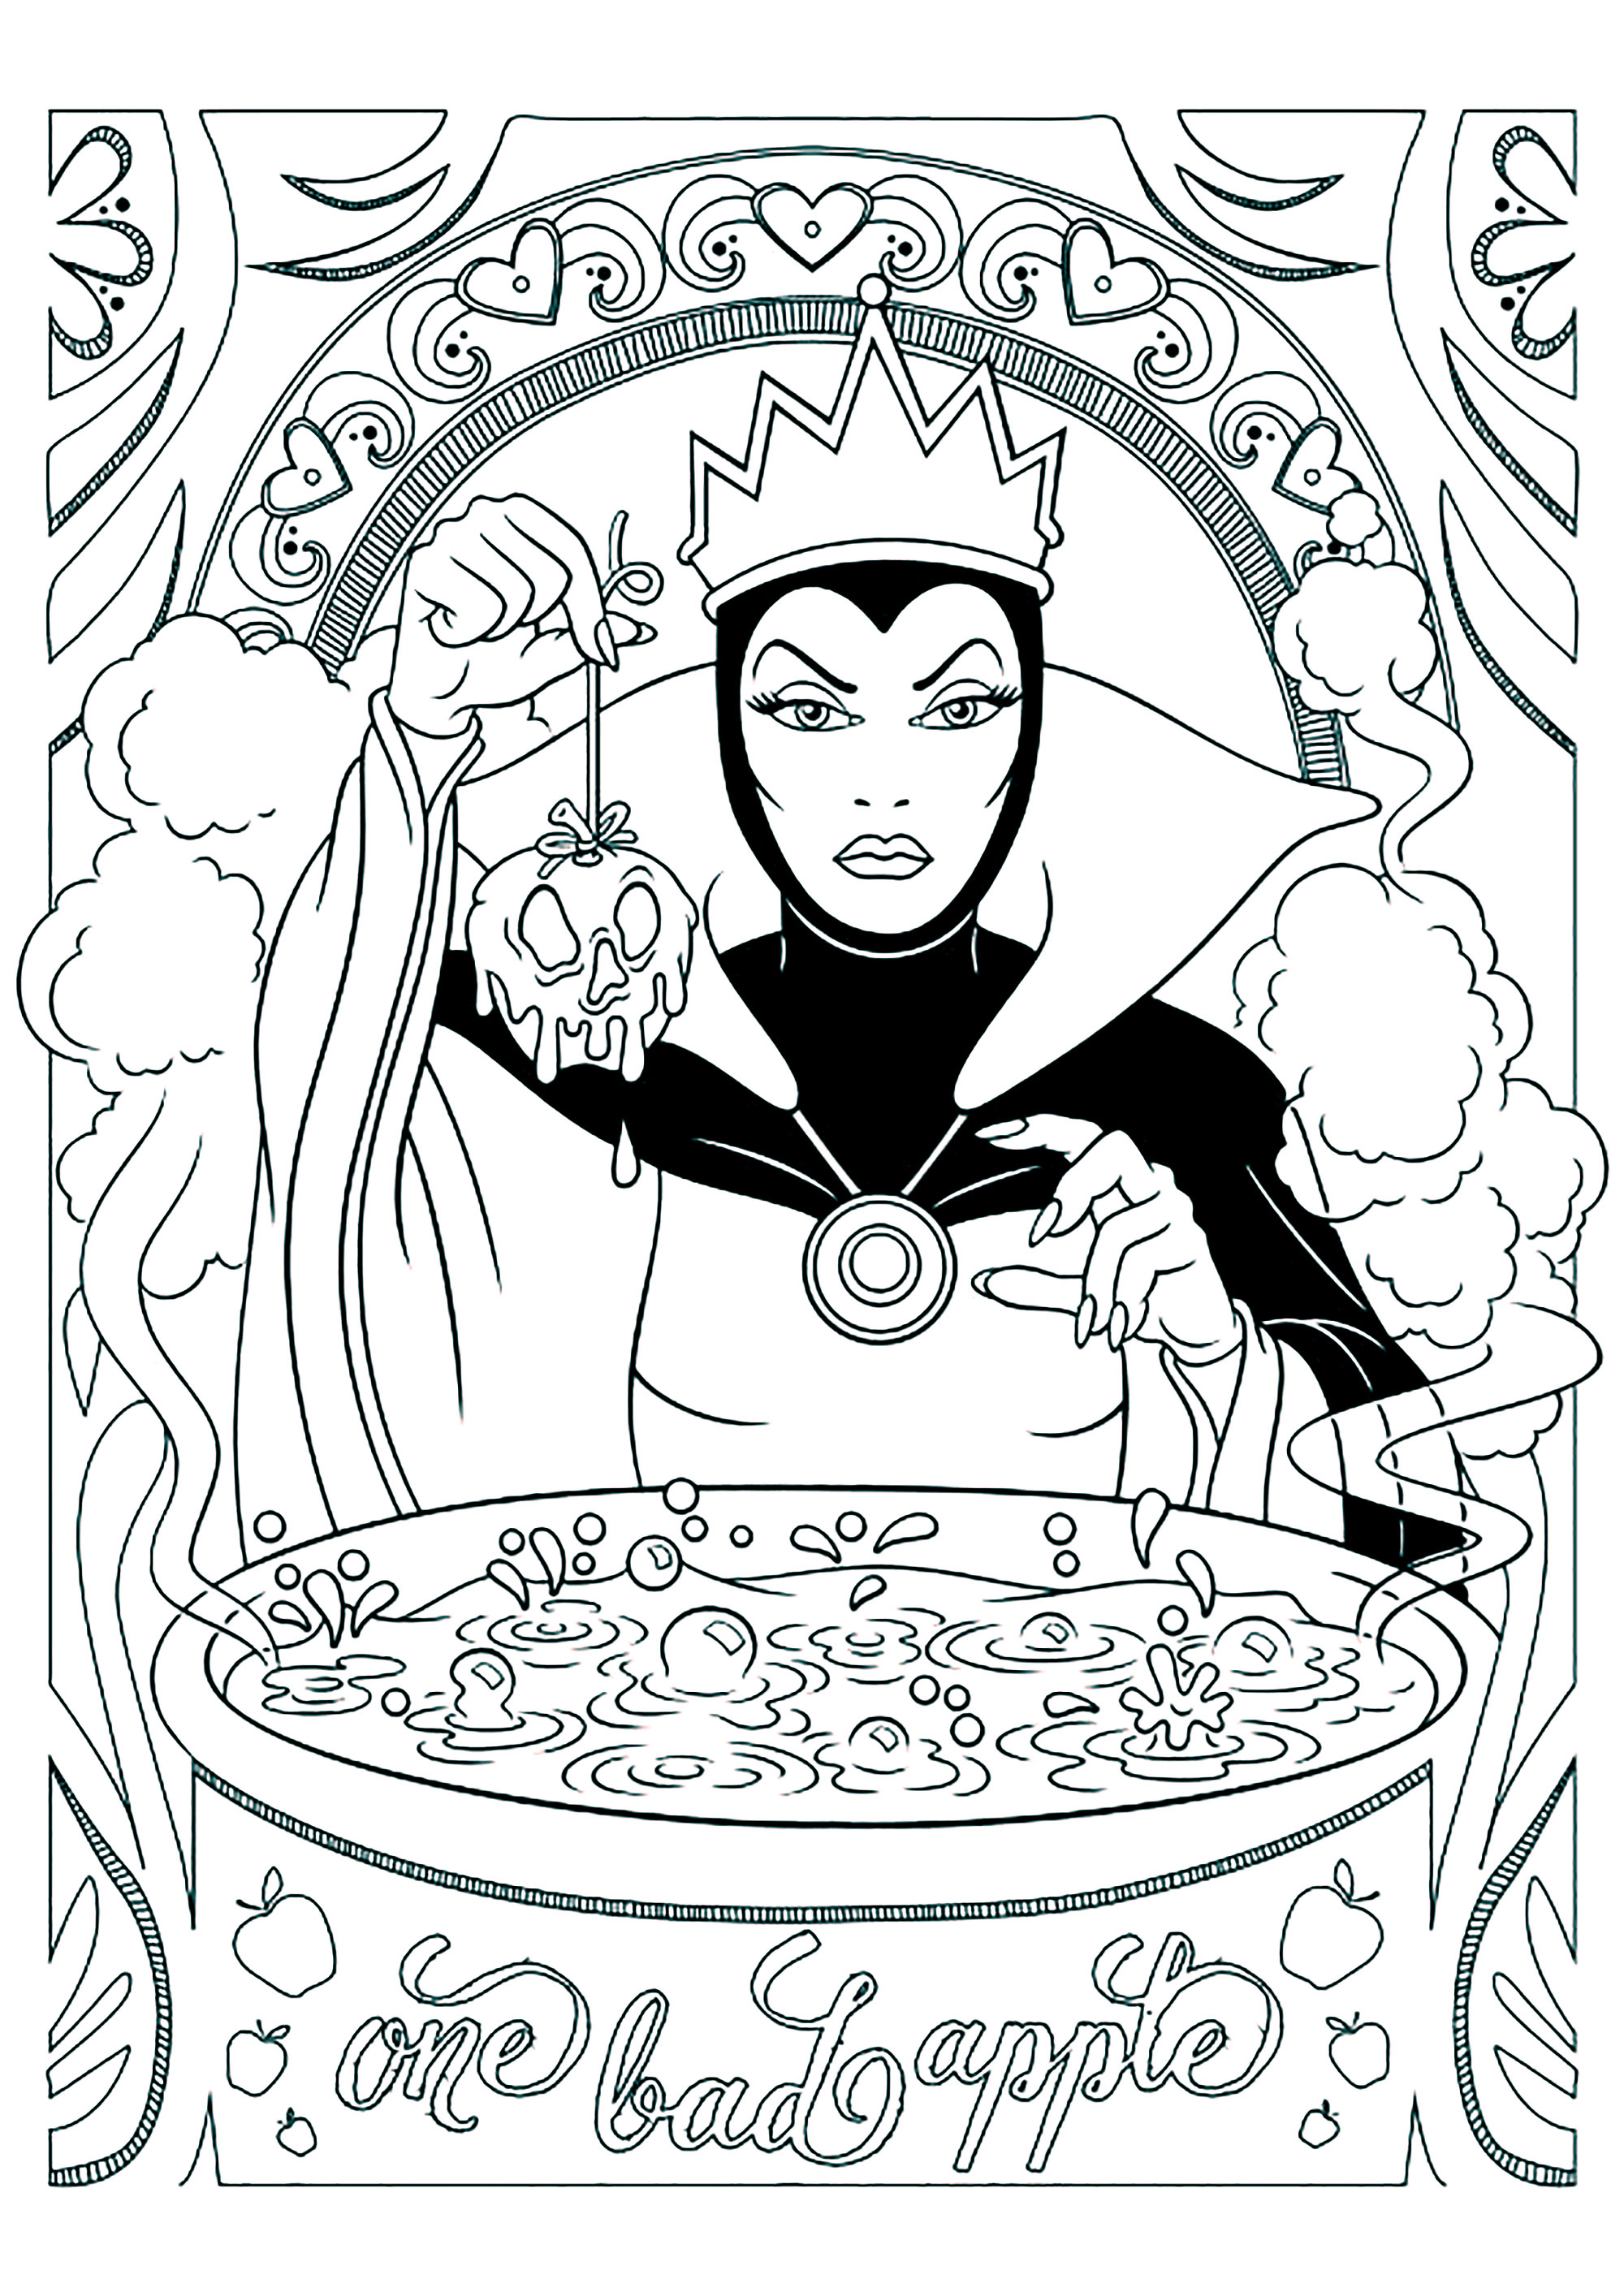 Snow whites evil queen prepares her poison apple